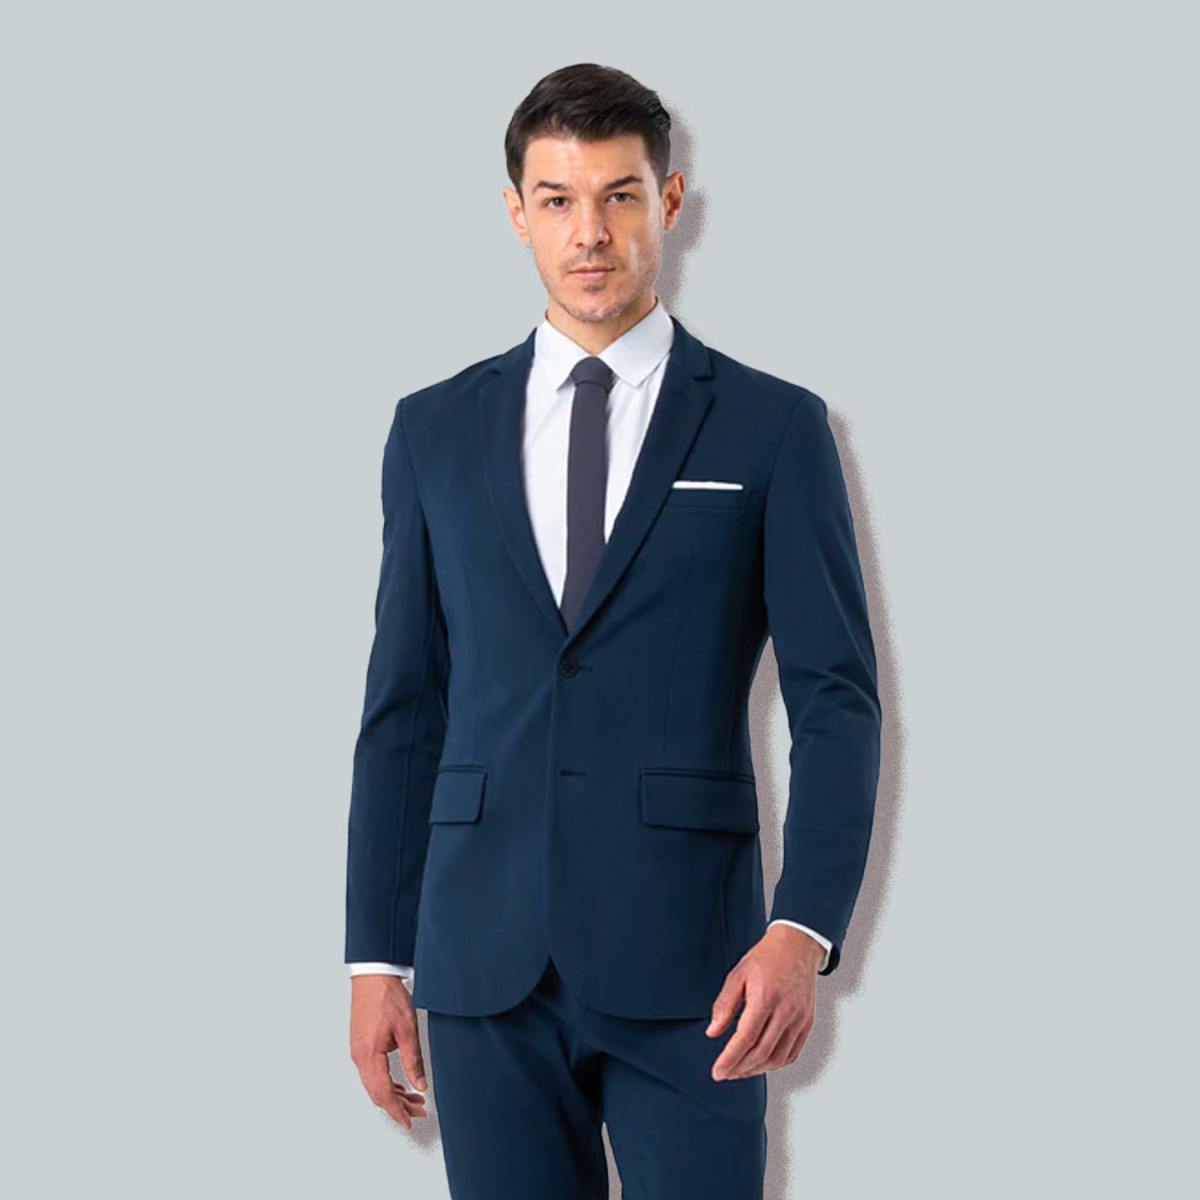 Best Sites to Buy Tuxedos and Suits Online | Men's Journal - Men's Journal